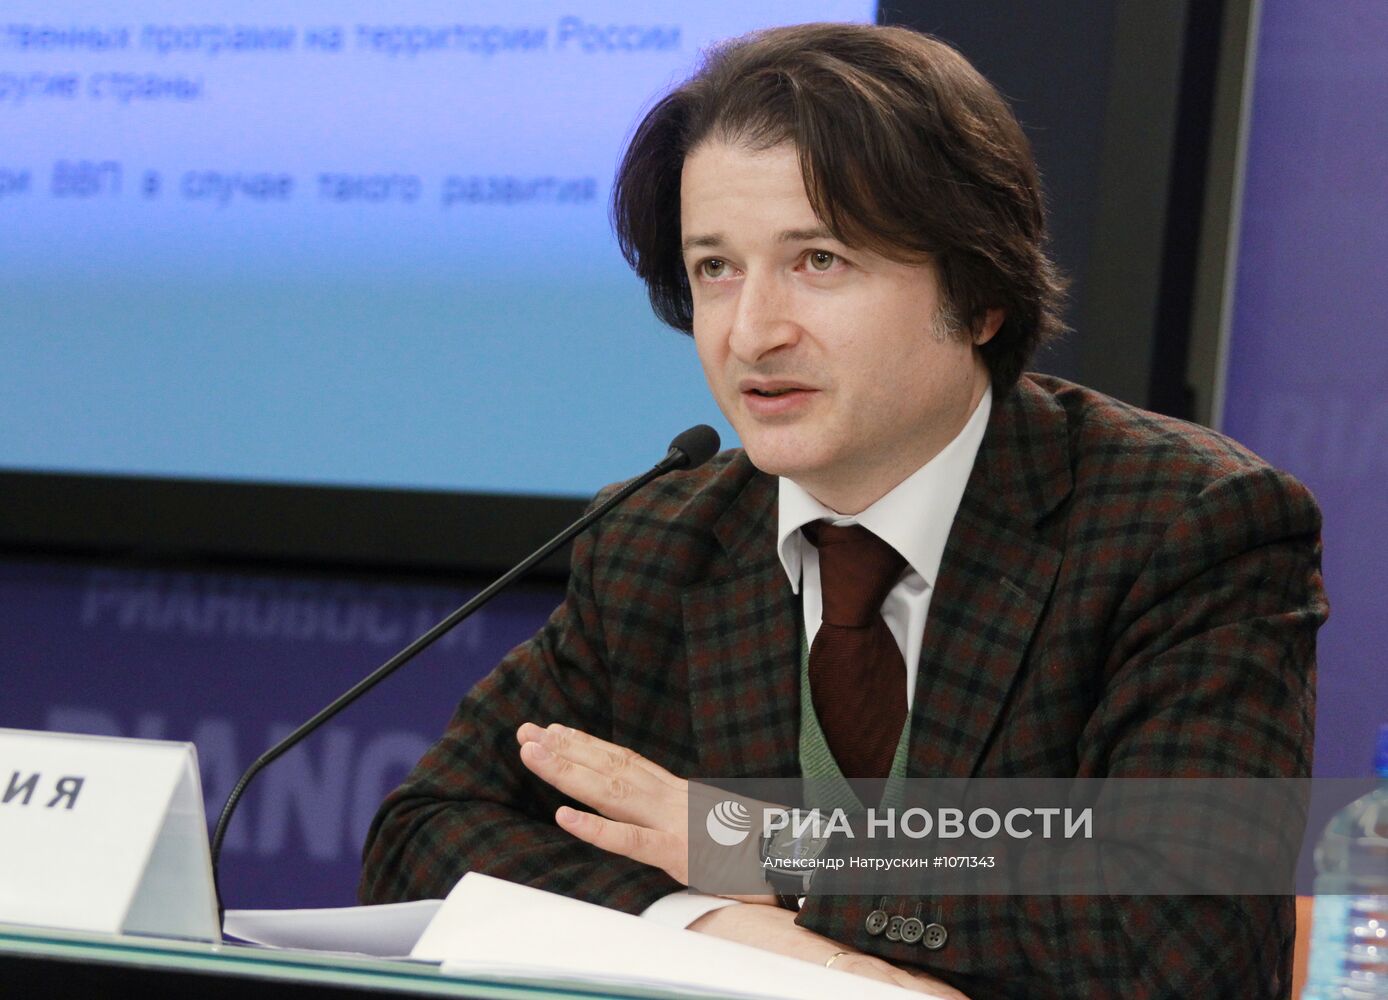 Пресс-конференция Рамаза Чантурии в РИА Новости